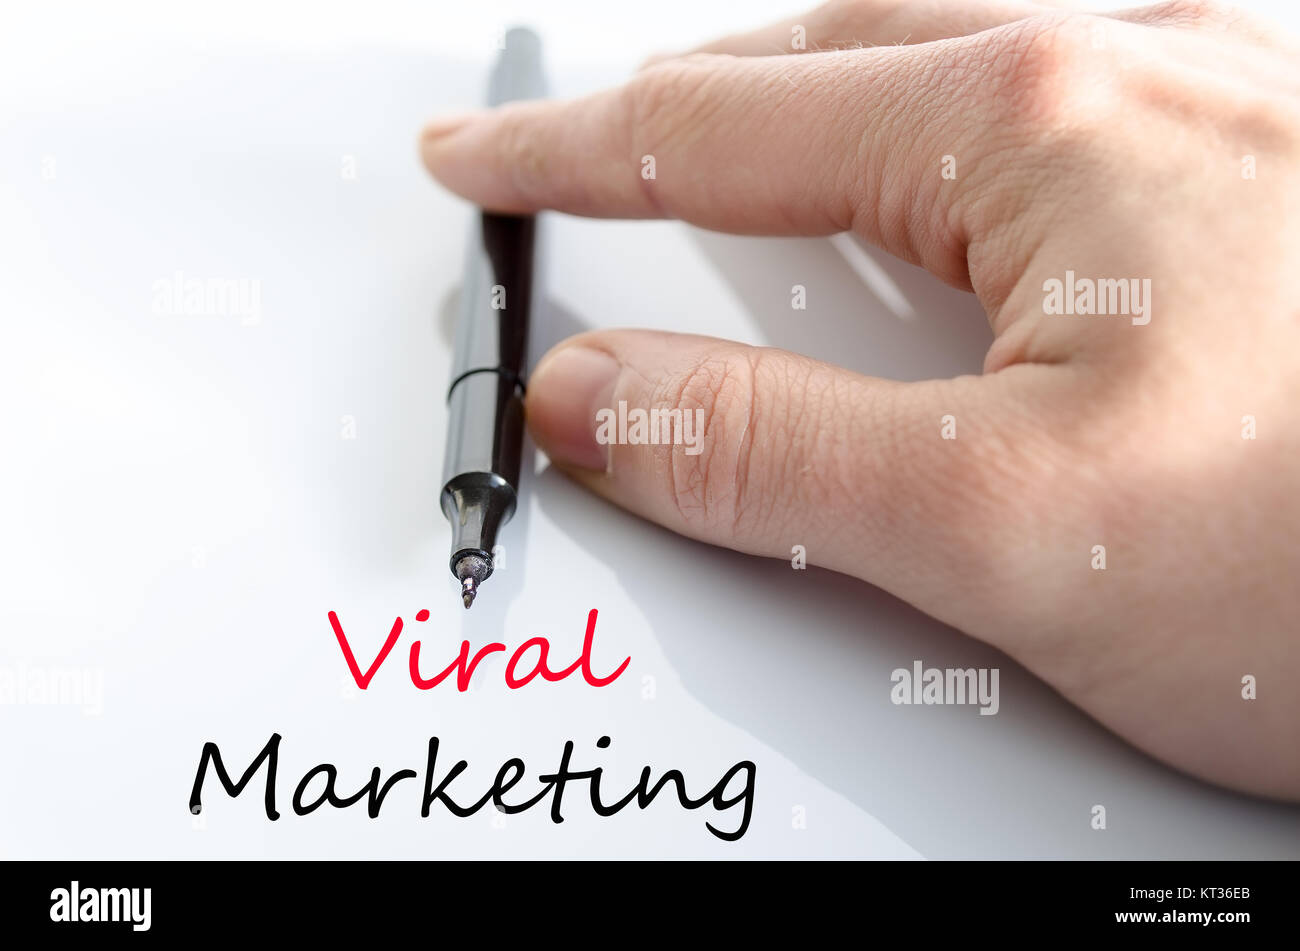 Viral marketing text concept Stock Photo